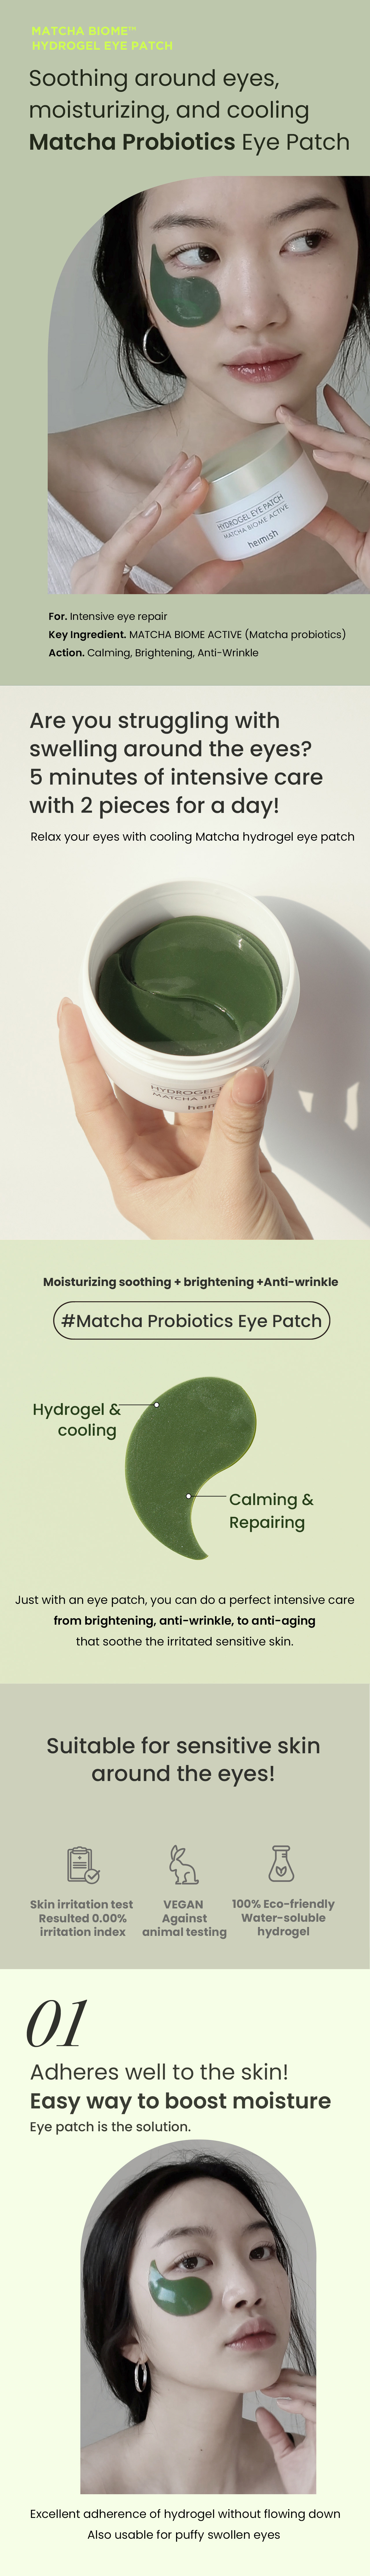 heimish - Matcha Biome Hydrogel Eye Patch - 1.4g x 60ea